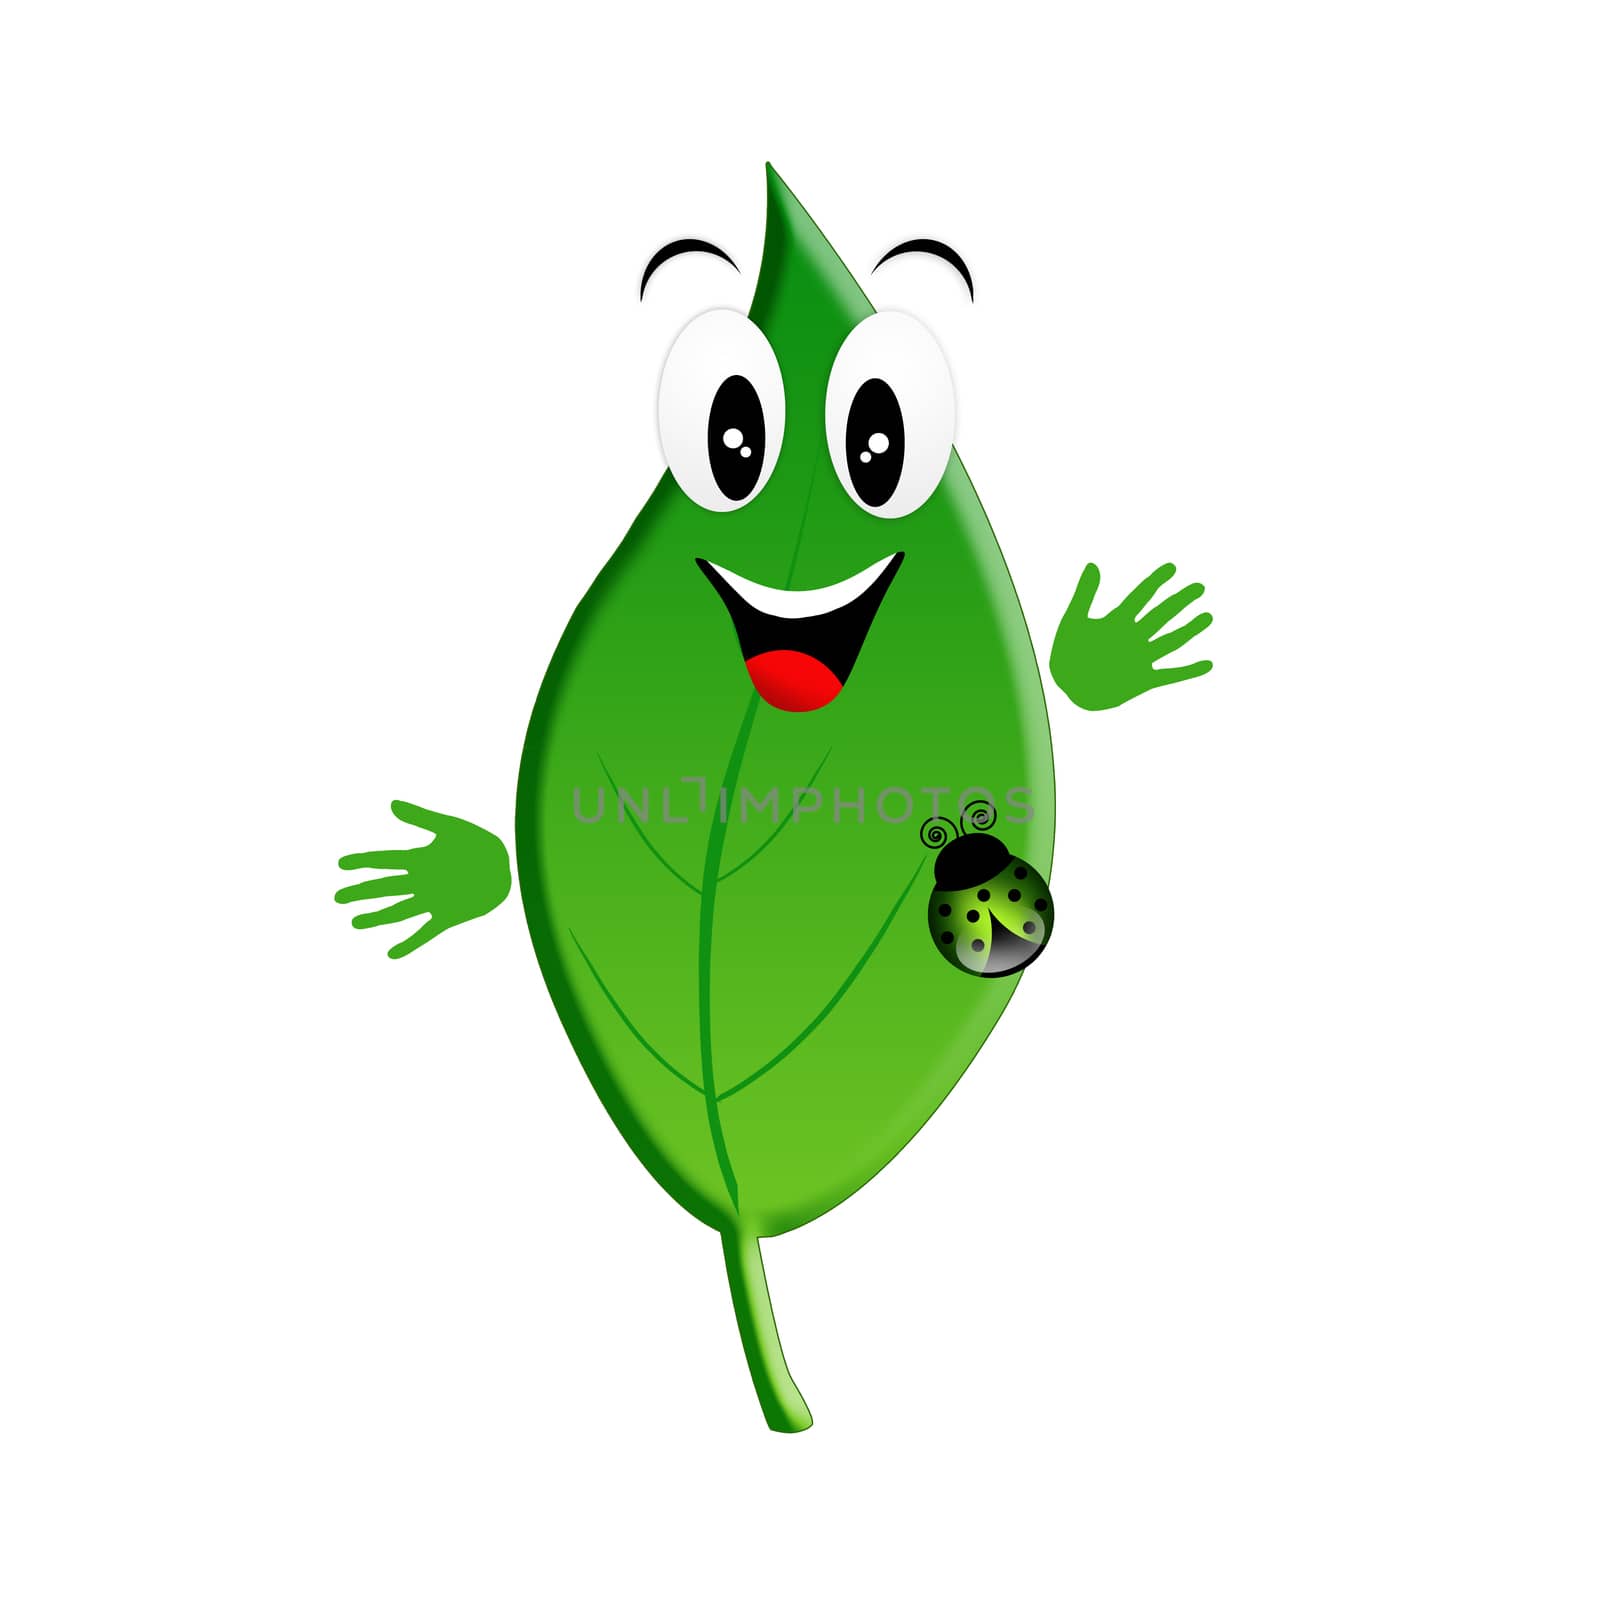 Green leaf for ecology